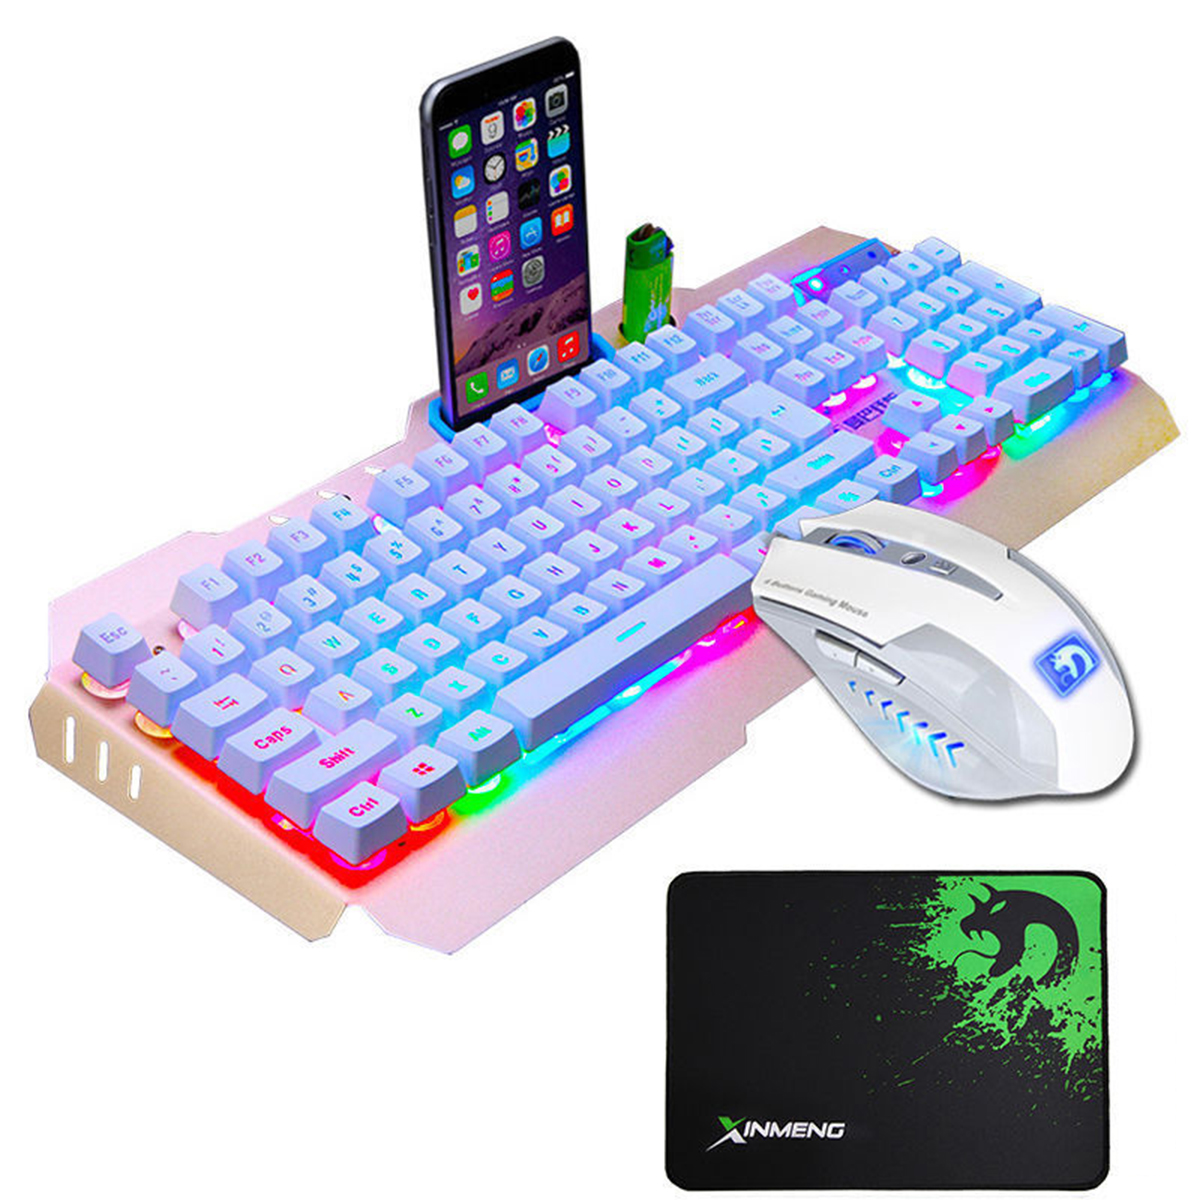 

USB Wired Colorful Backlight Механический Handfeel Gaming Клавиатура и Мышь Combo